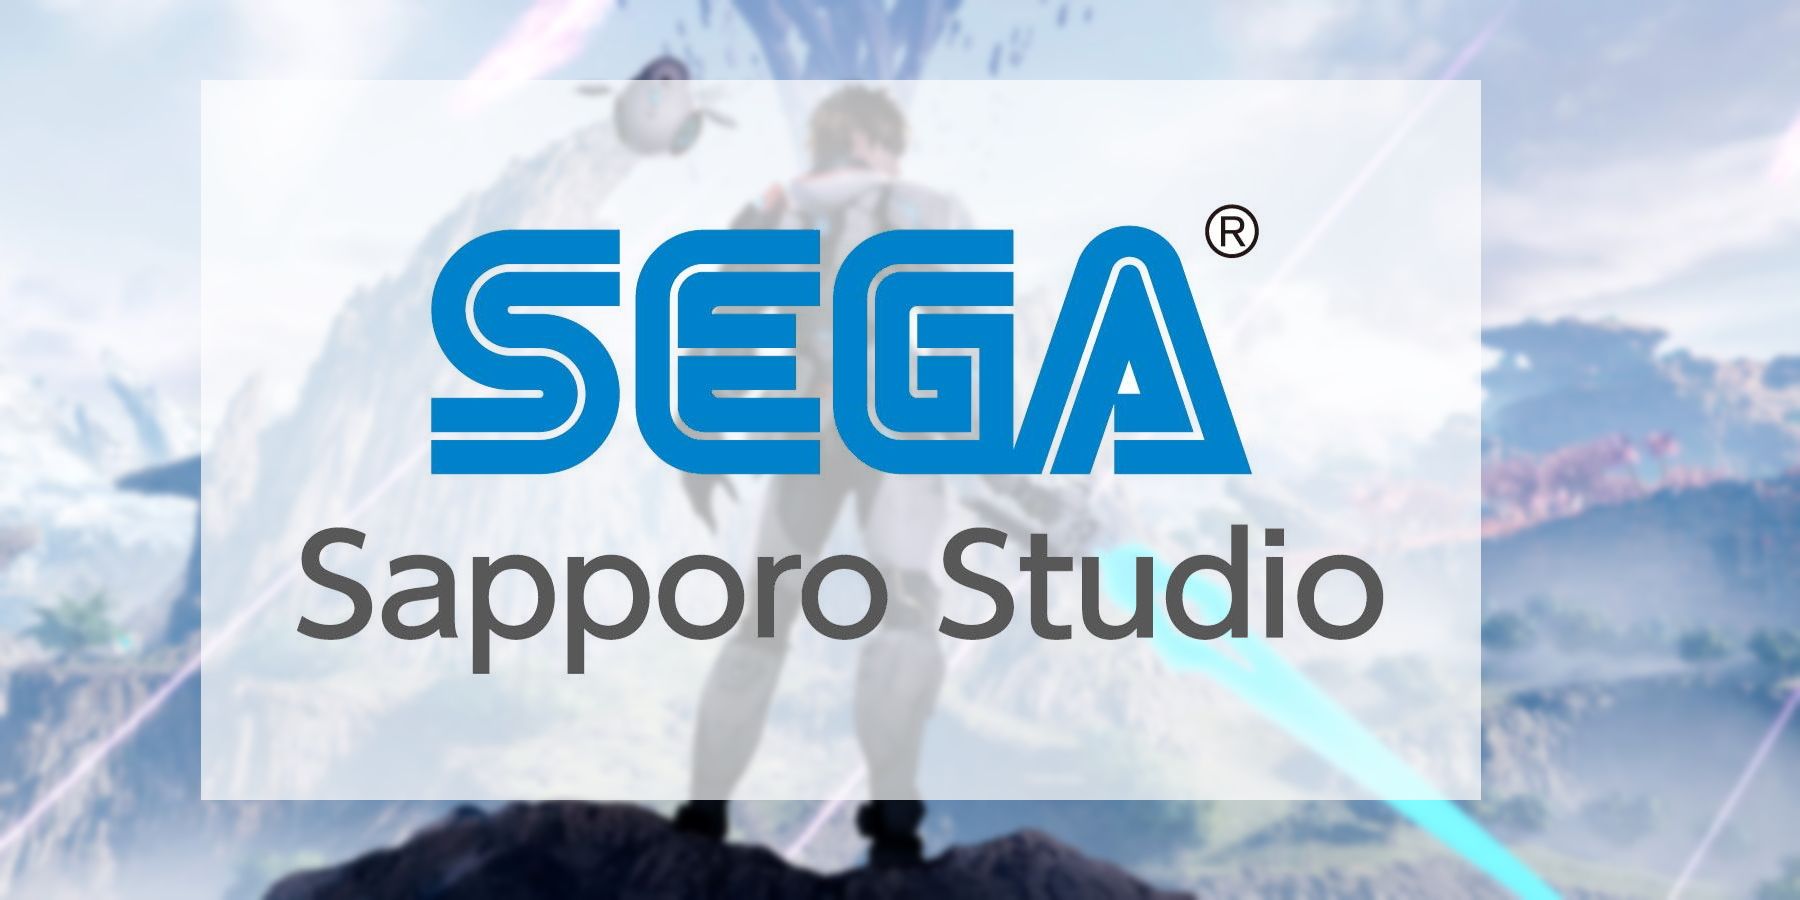 sega-sapporo-studio-phantasy-star-online-producer